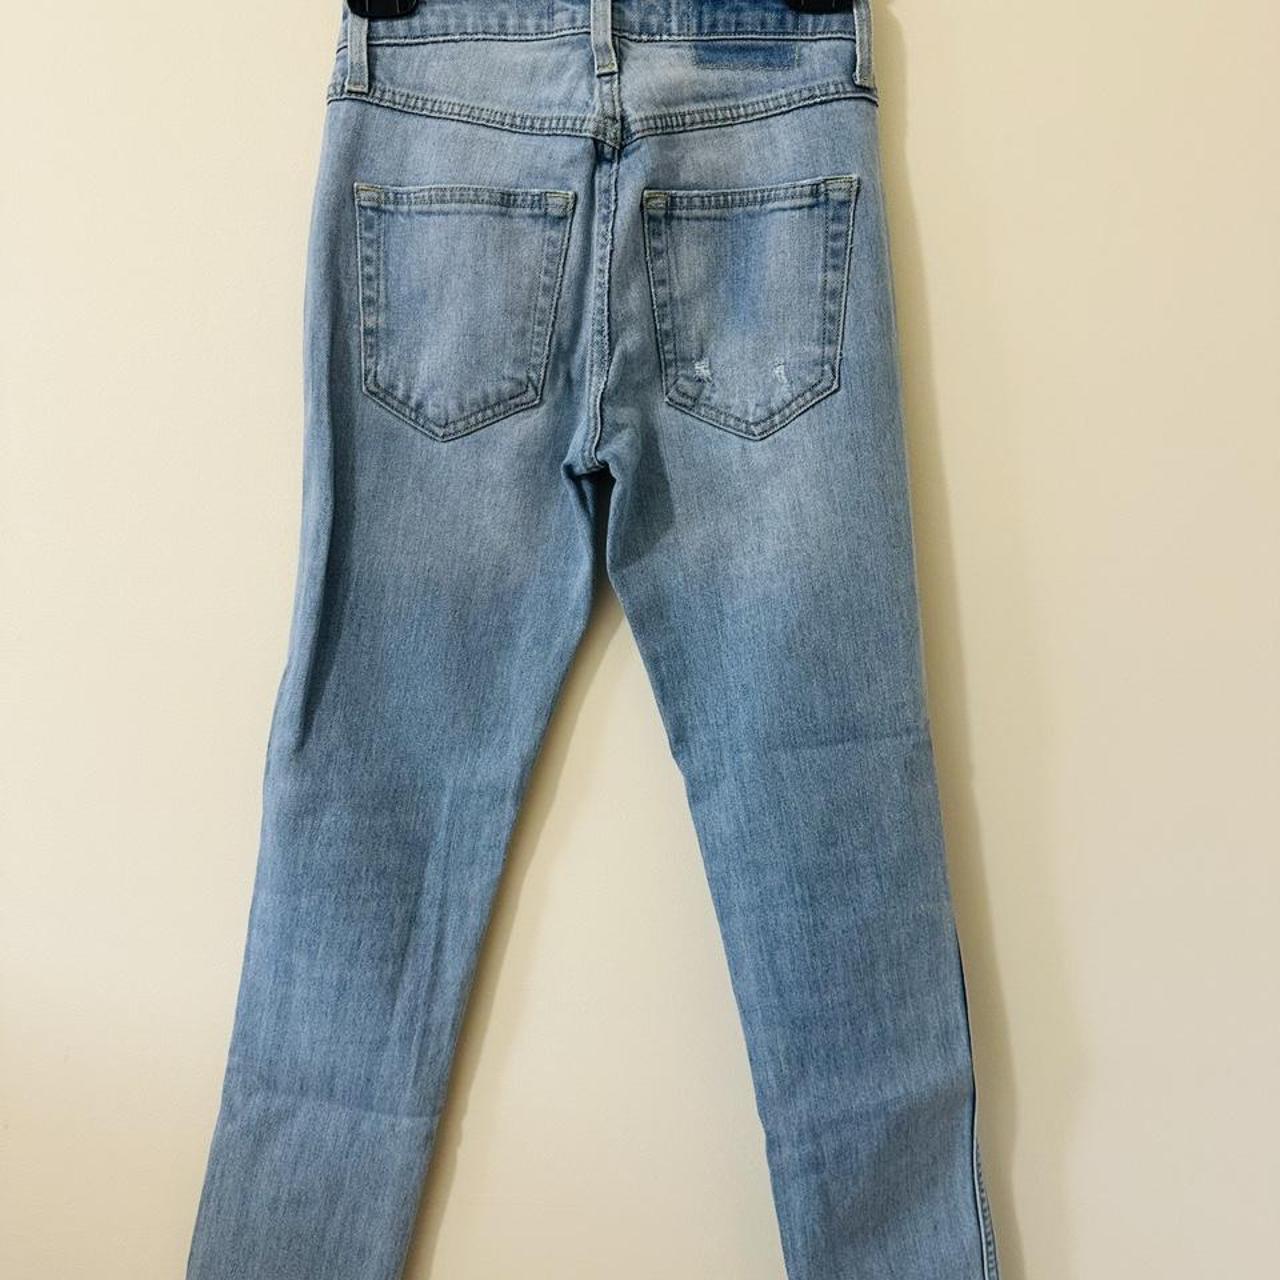 AMO 'babe' Jeans In 70's Blue 98% cotton, 2%... - Depop